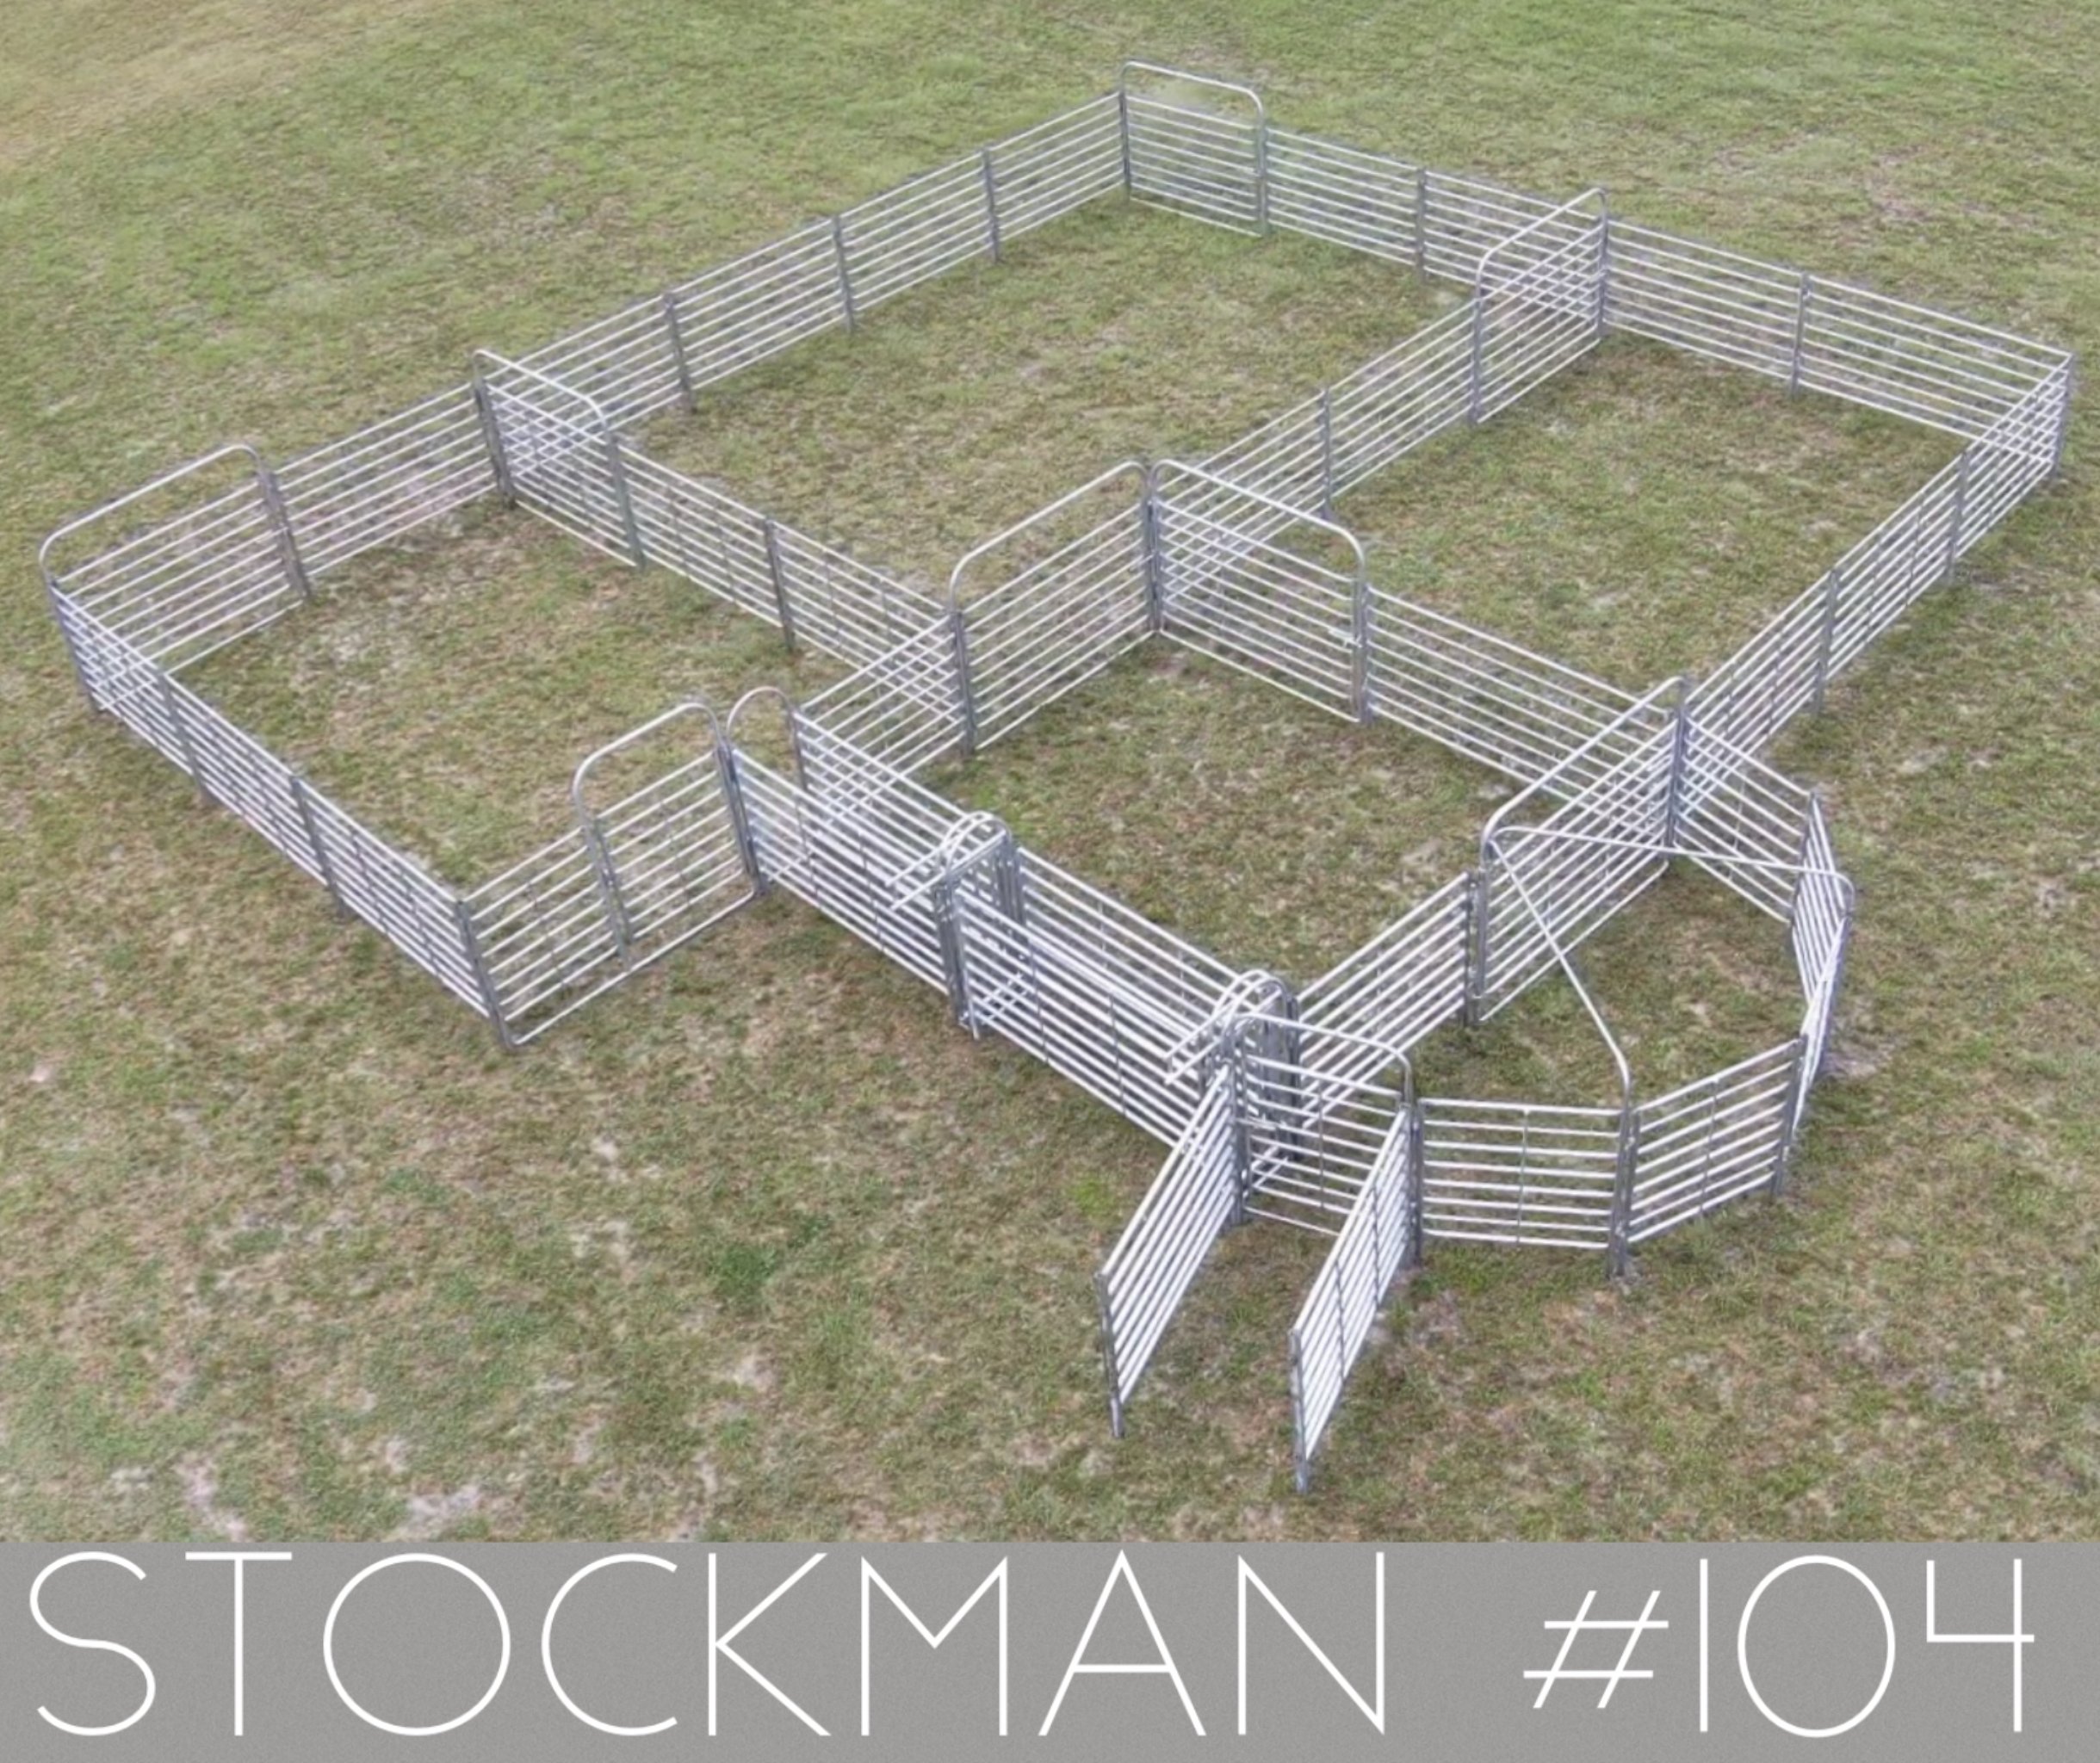 Stockman 104